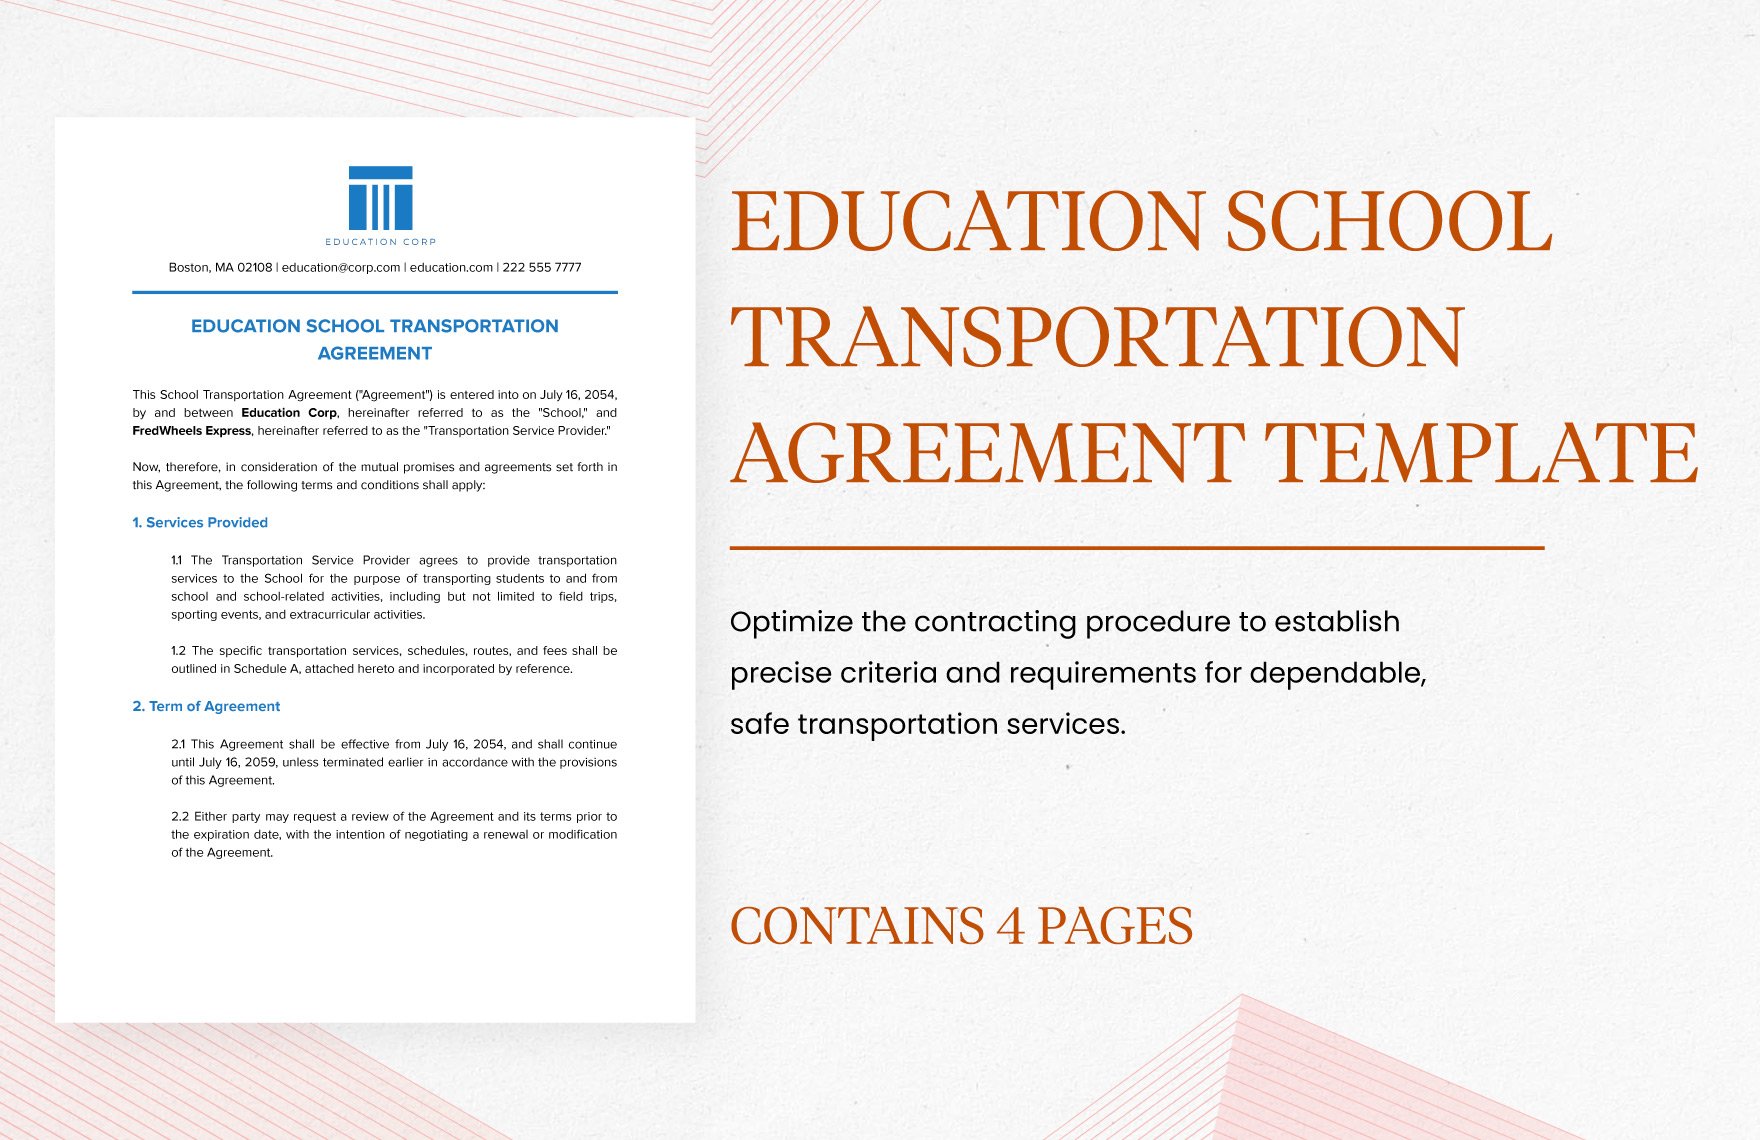 Education School Transportation Agreement Template